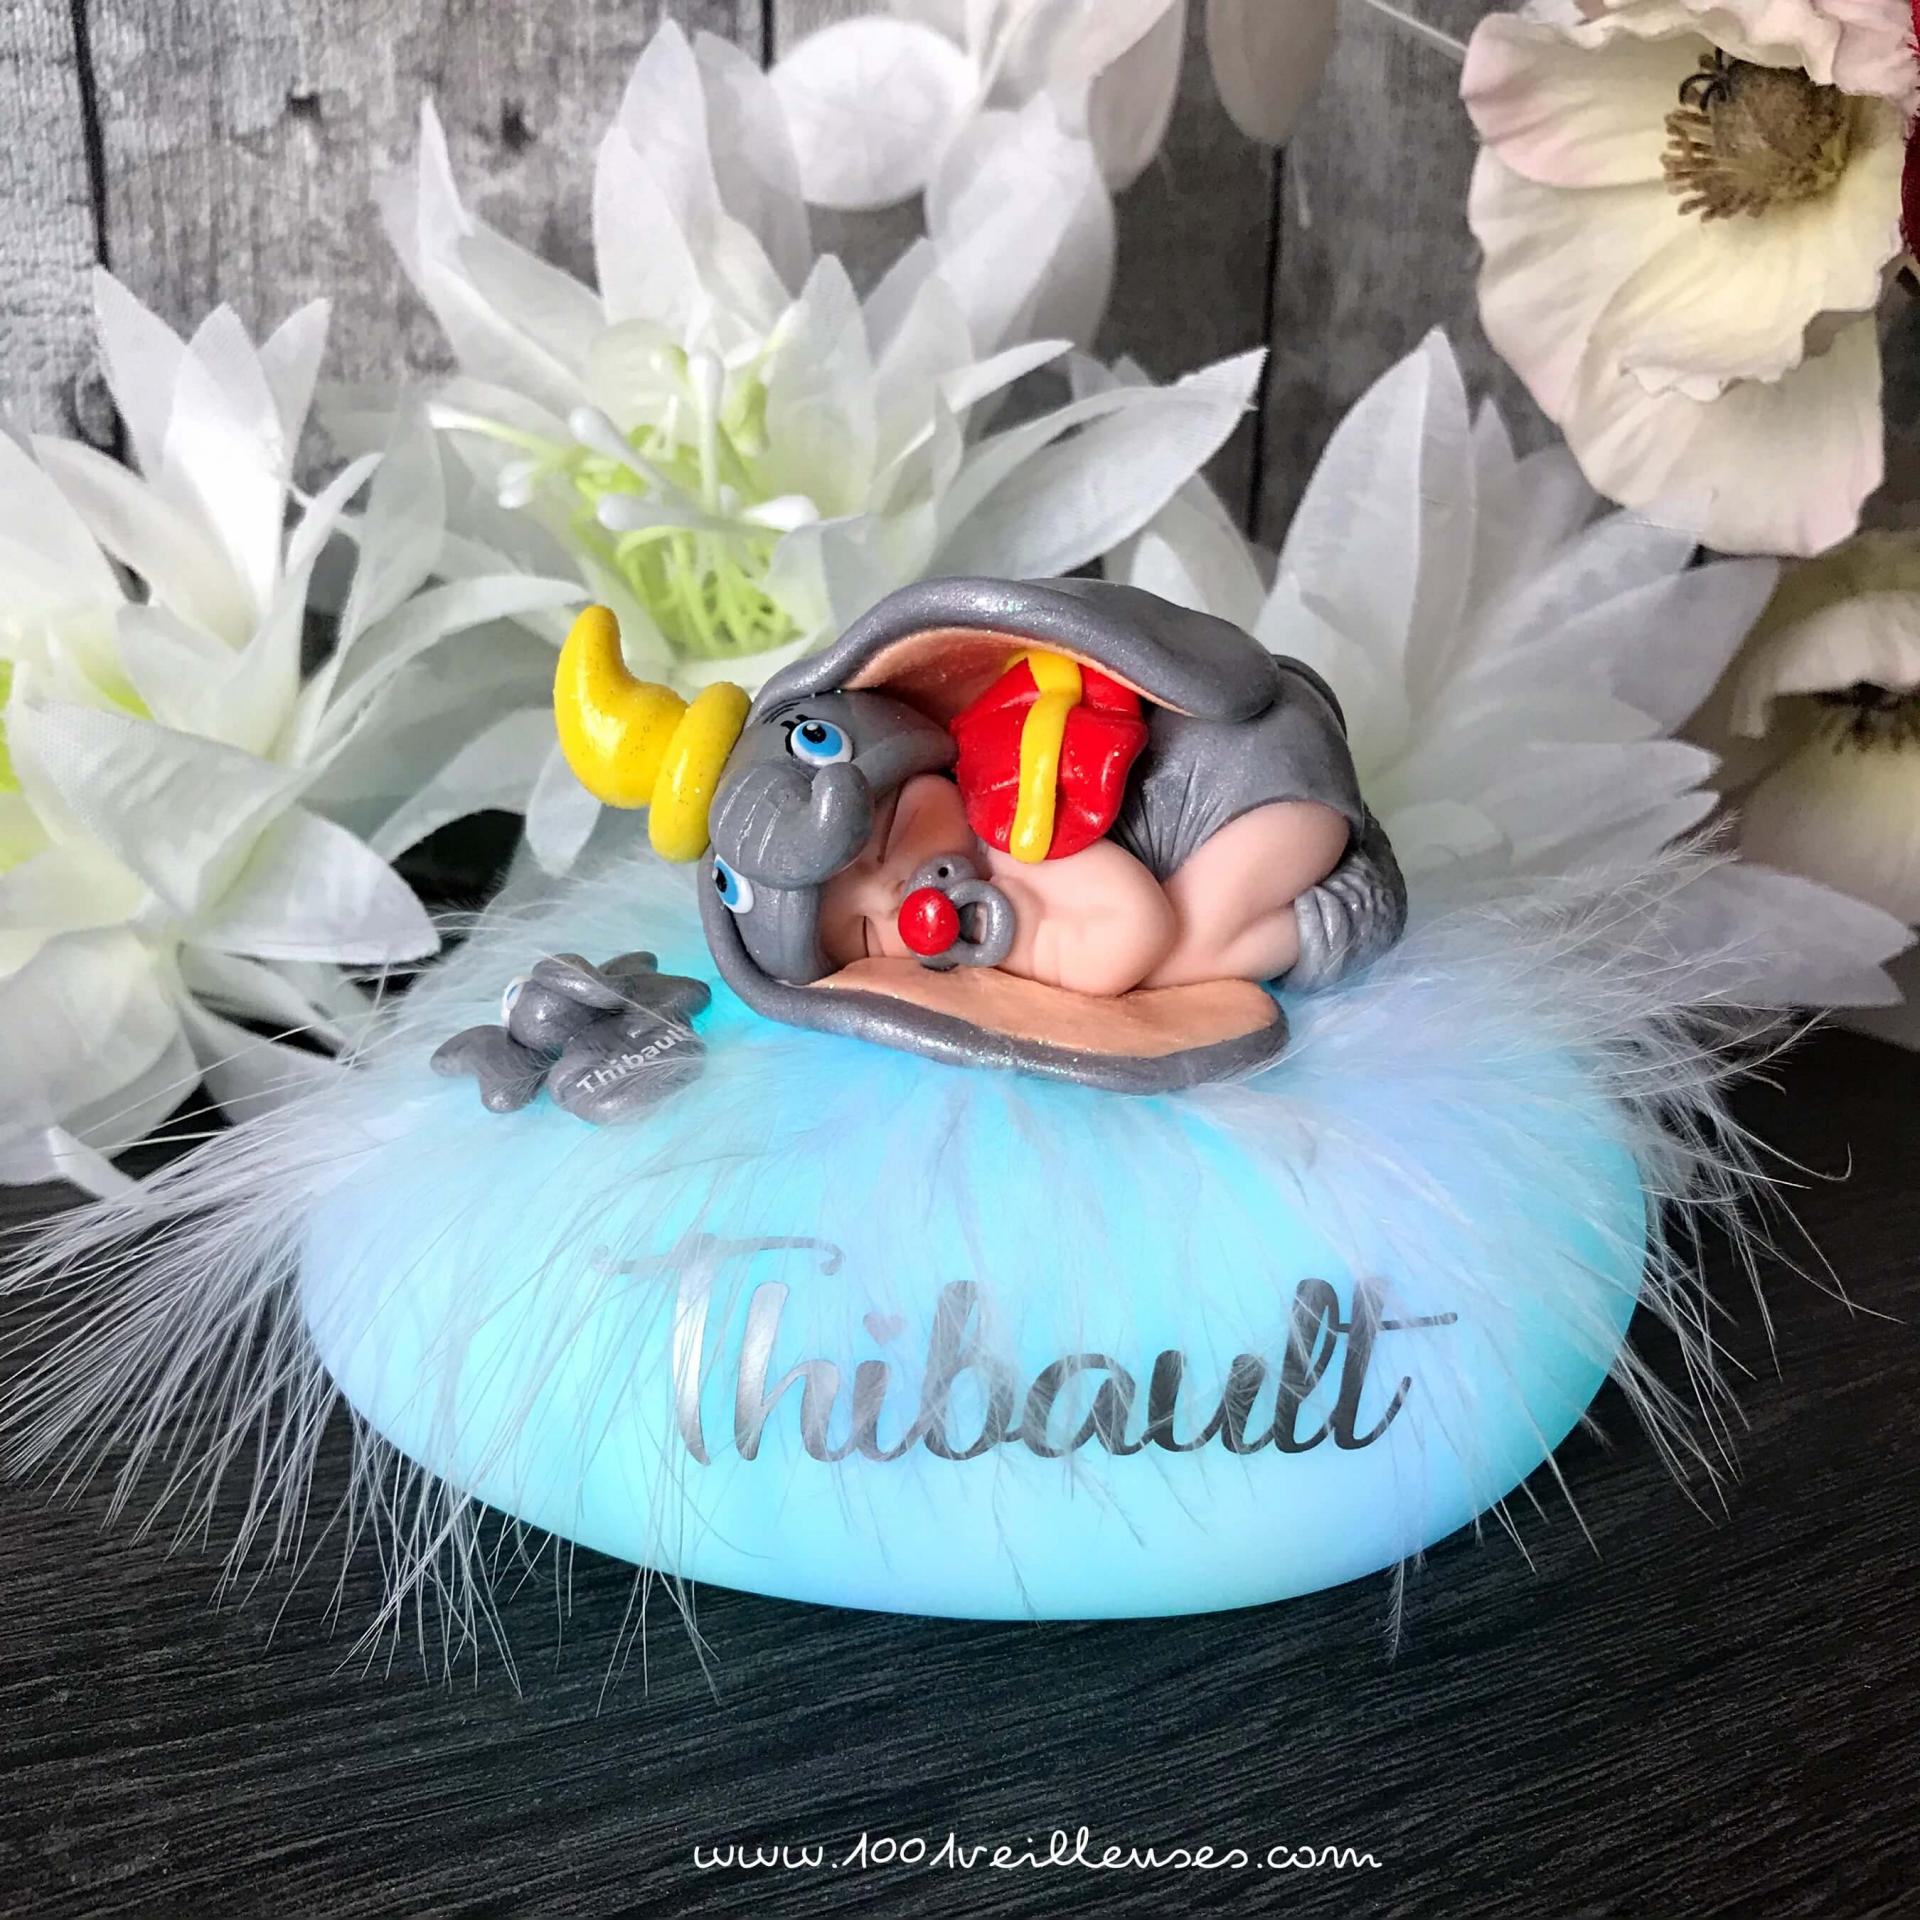 Unique newborn gift, handmade Dumbo-themed night light